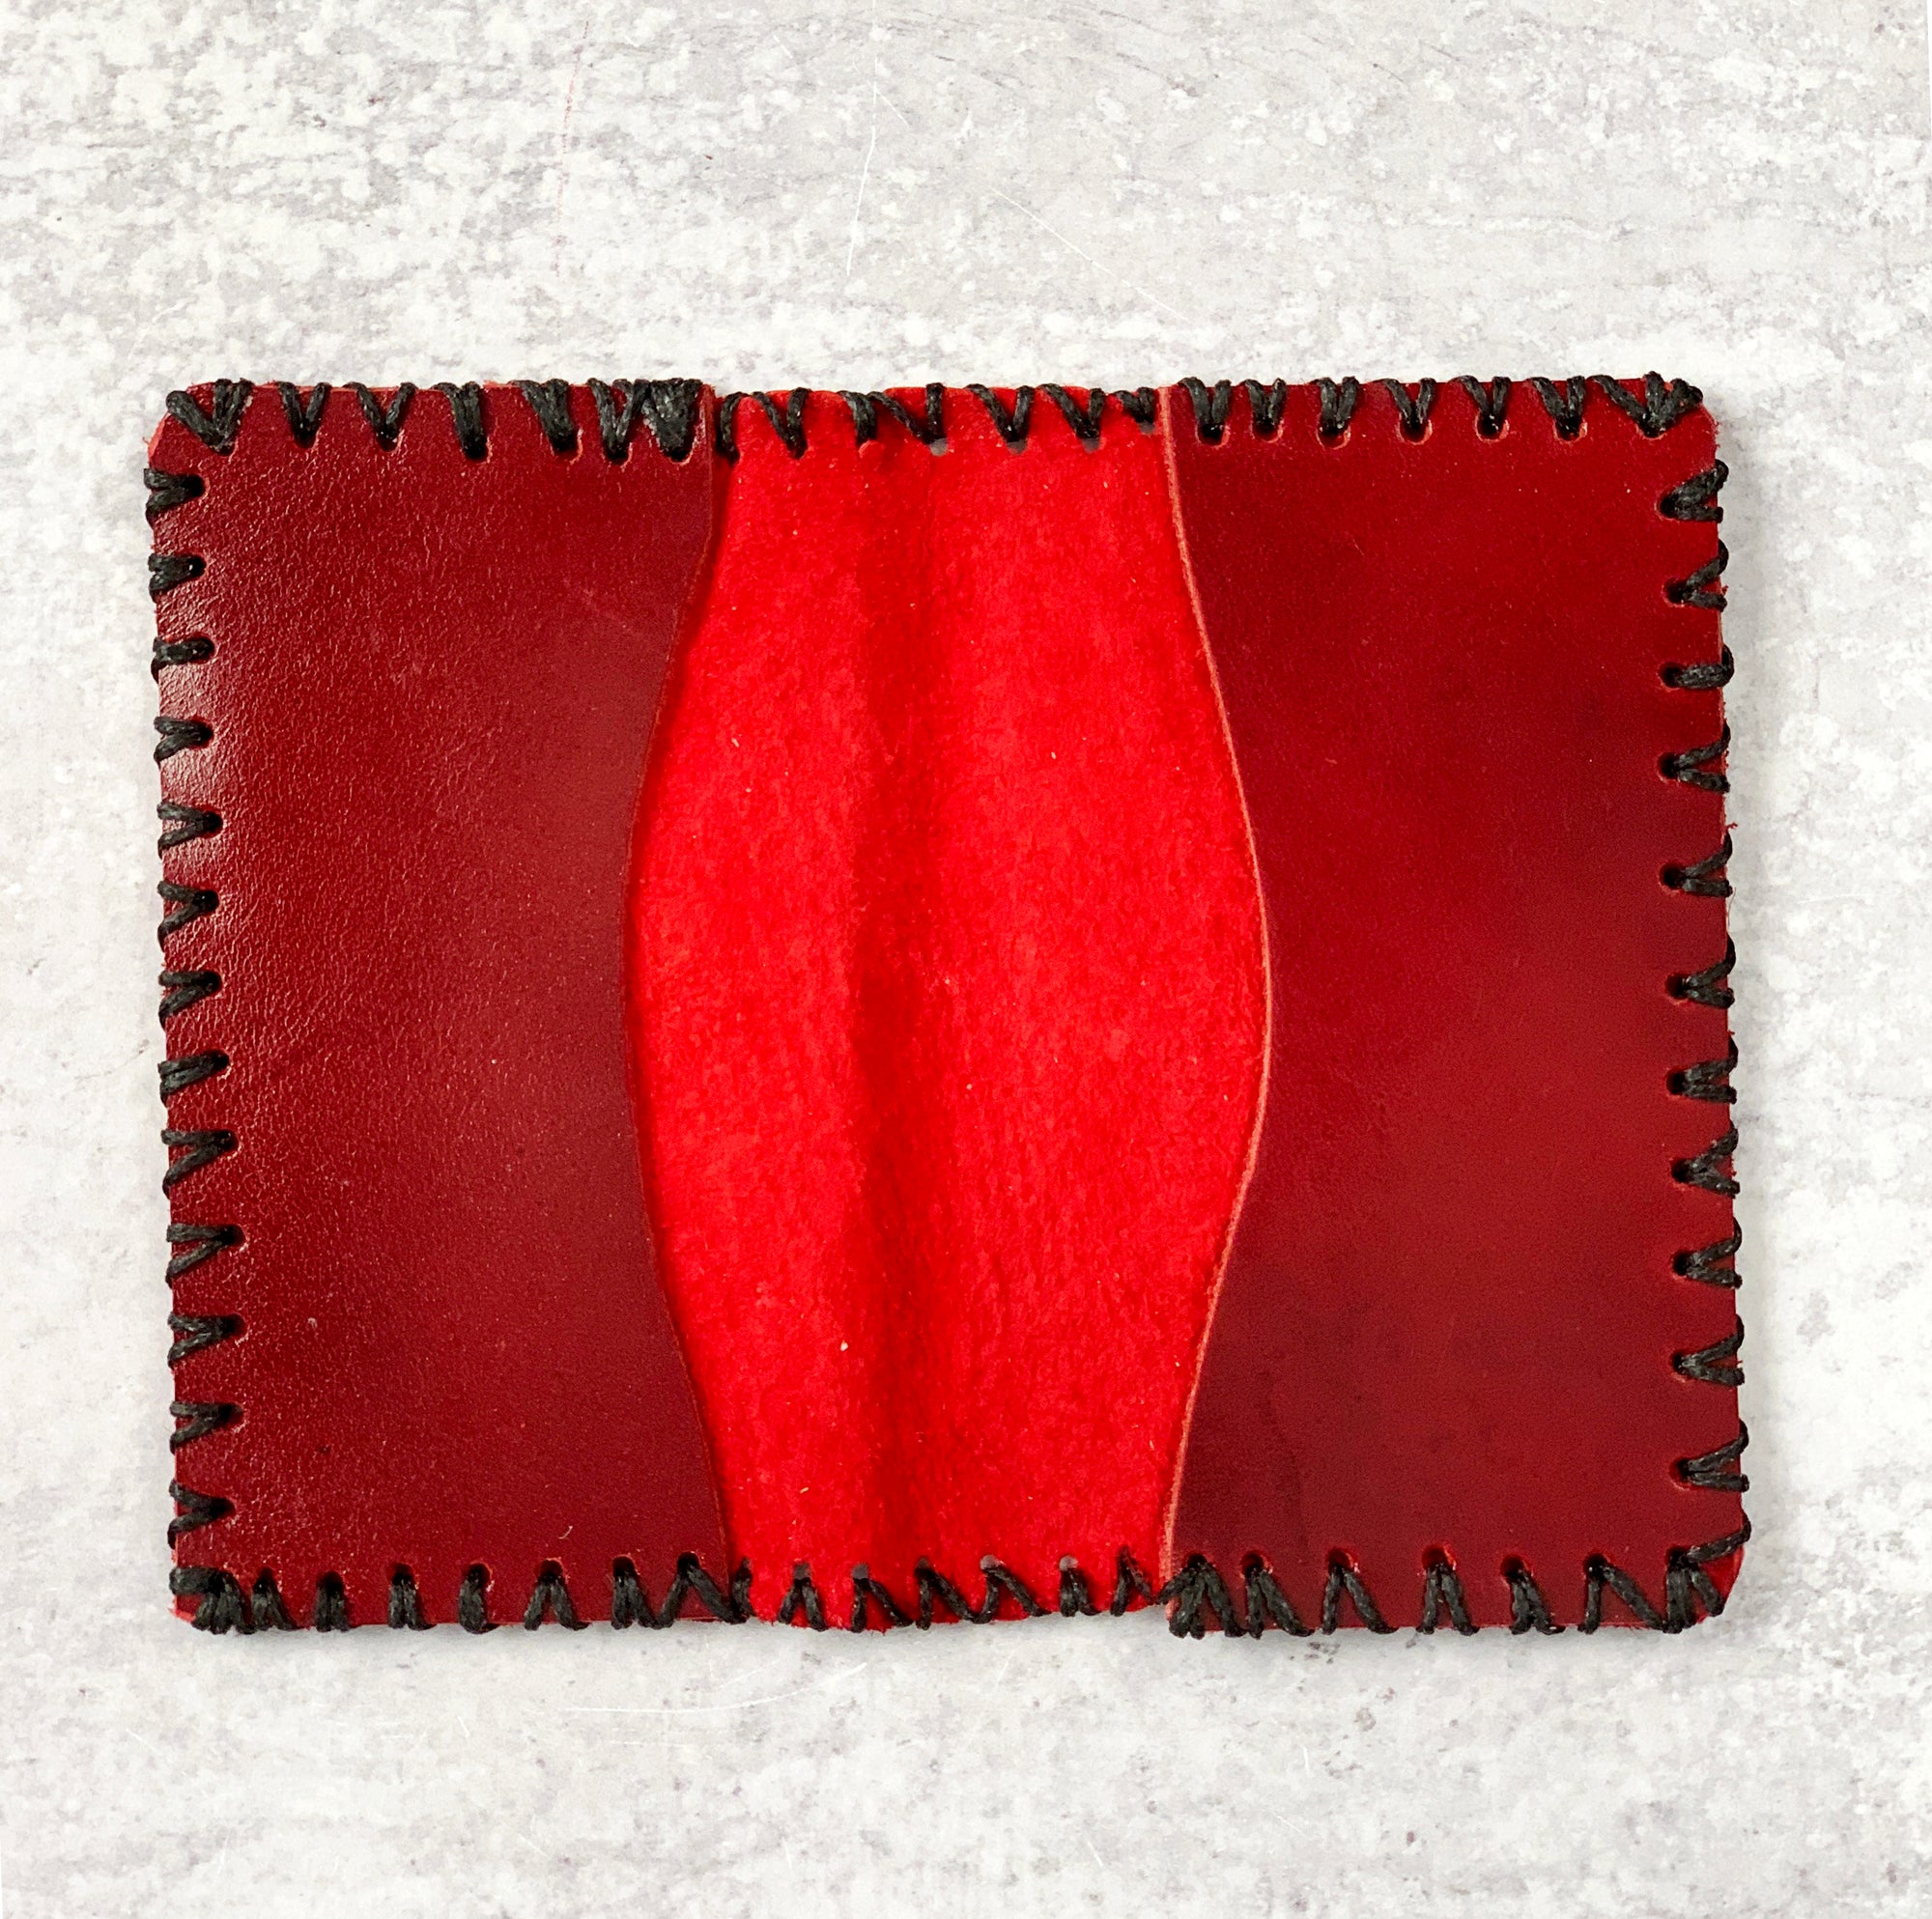 Red Snake Skin Leather Wallet